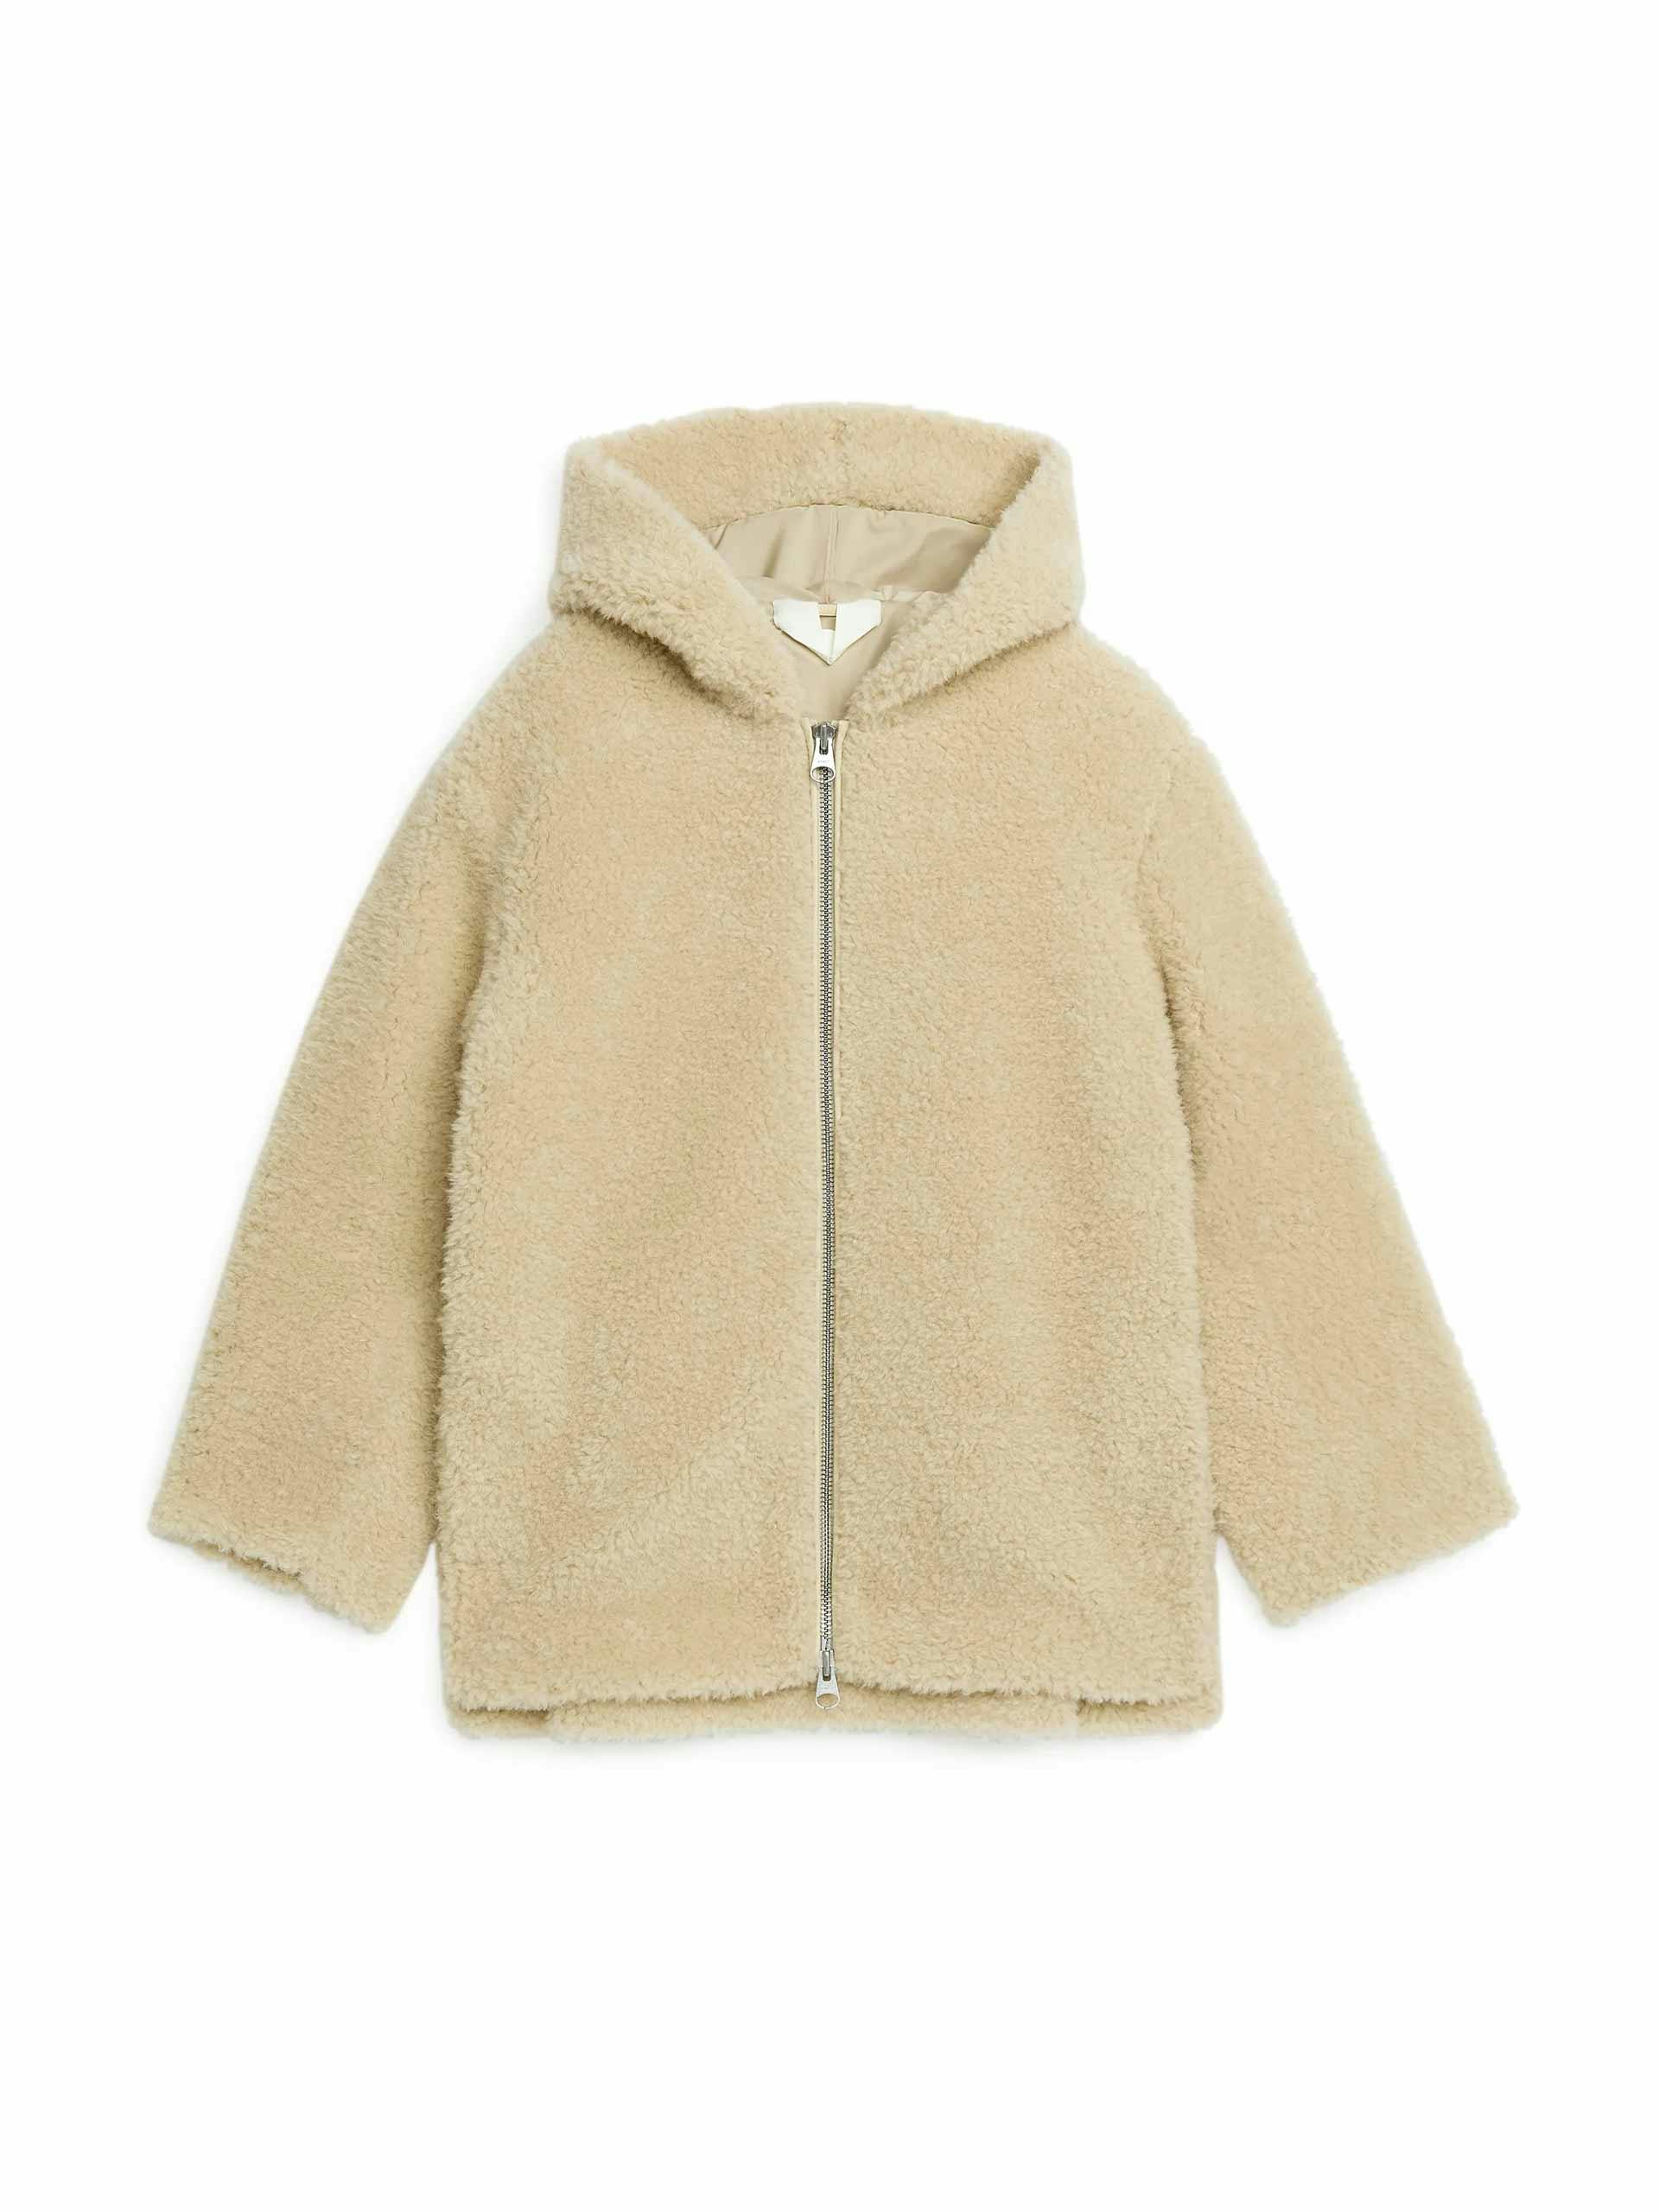 Wool pile jacket